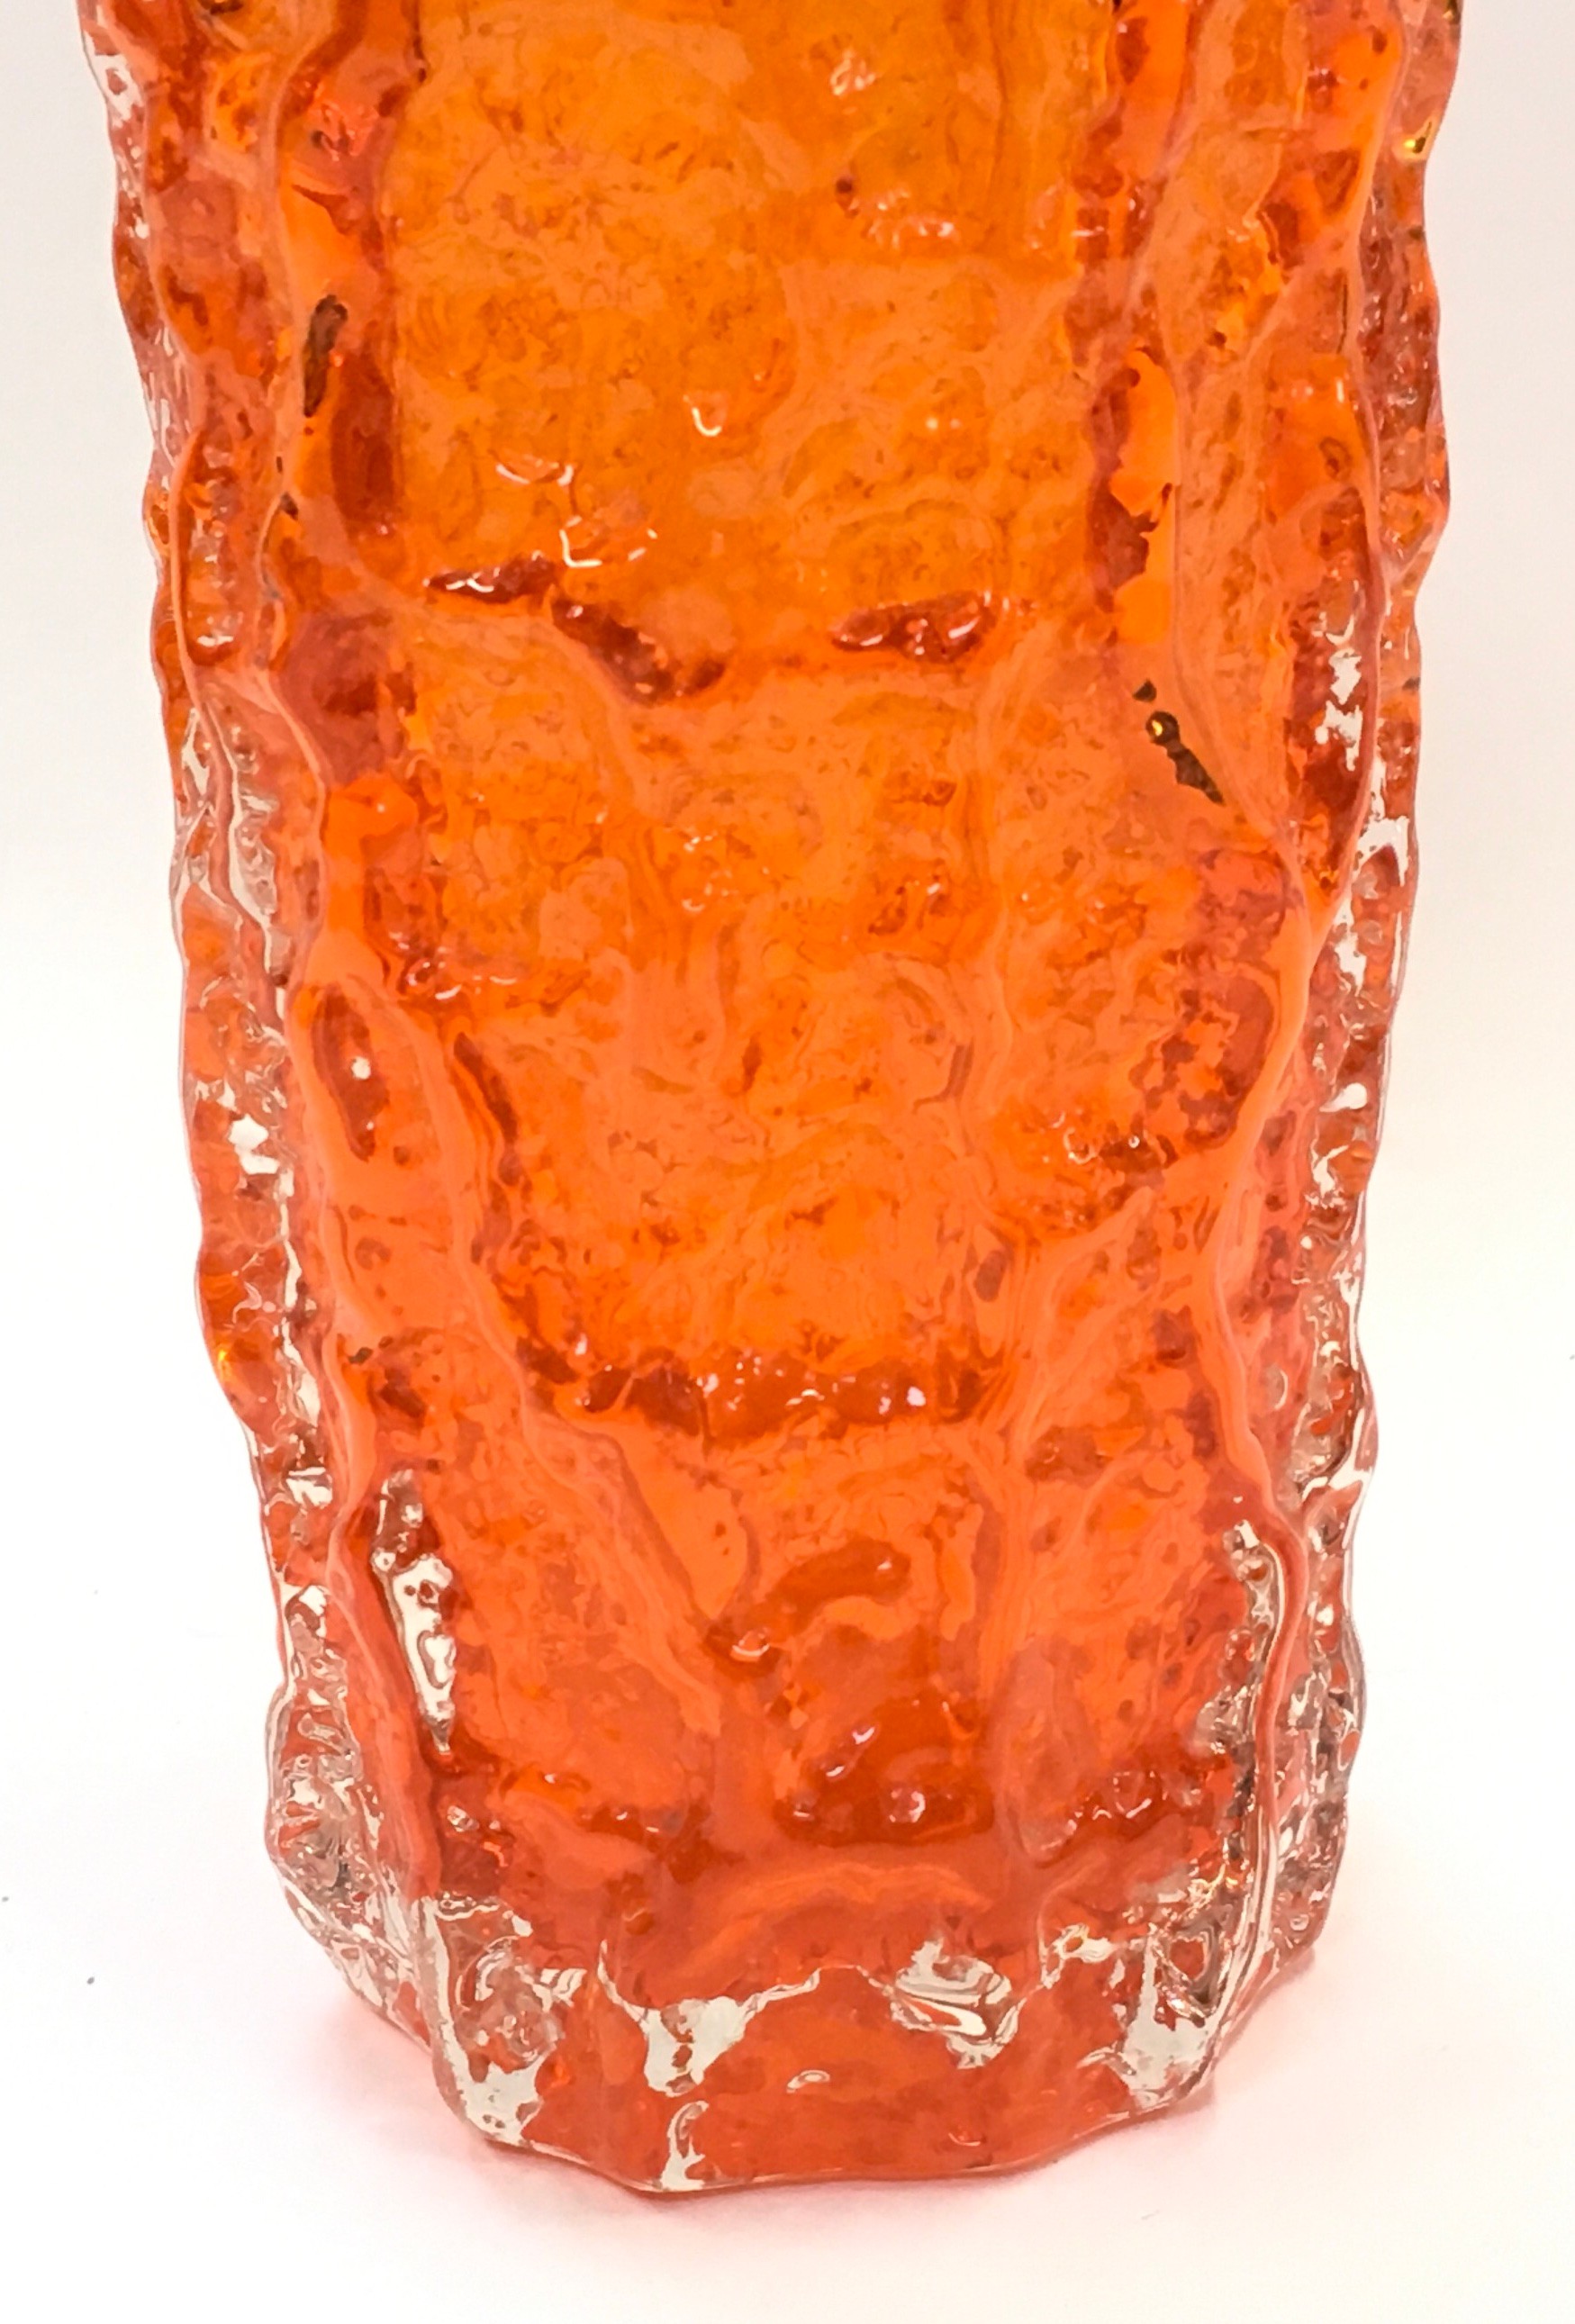 Whitefriars Tangerine textured glass vase designed by Geoffrey Baxter 20 cm high 8.5cm diameter. - Image 3 of 5